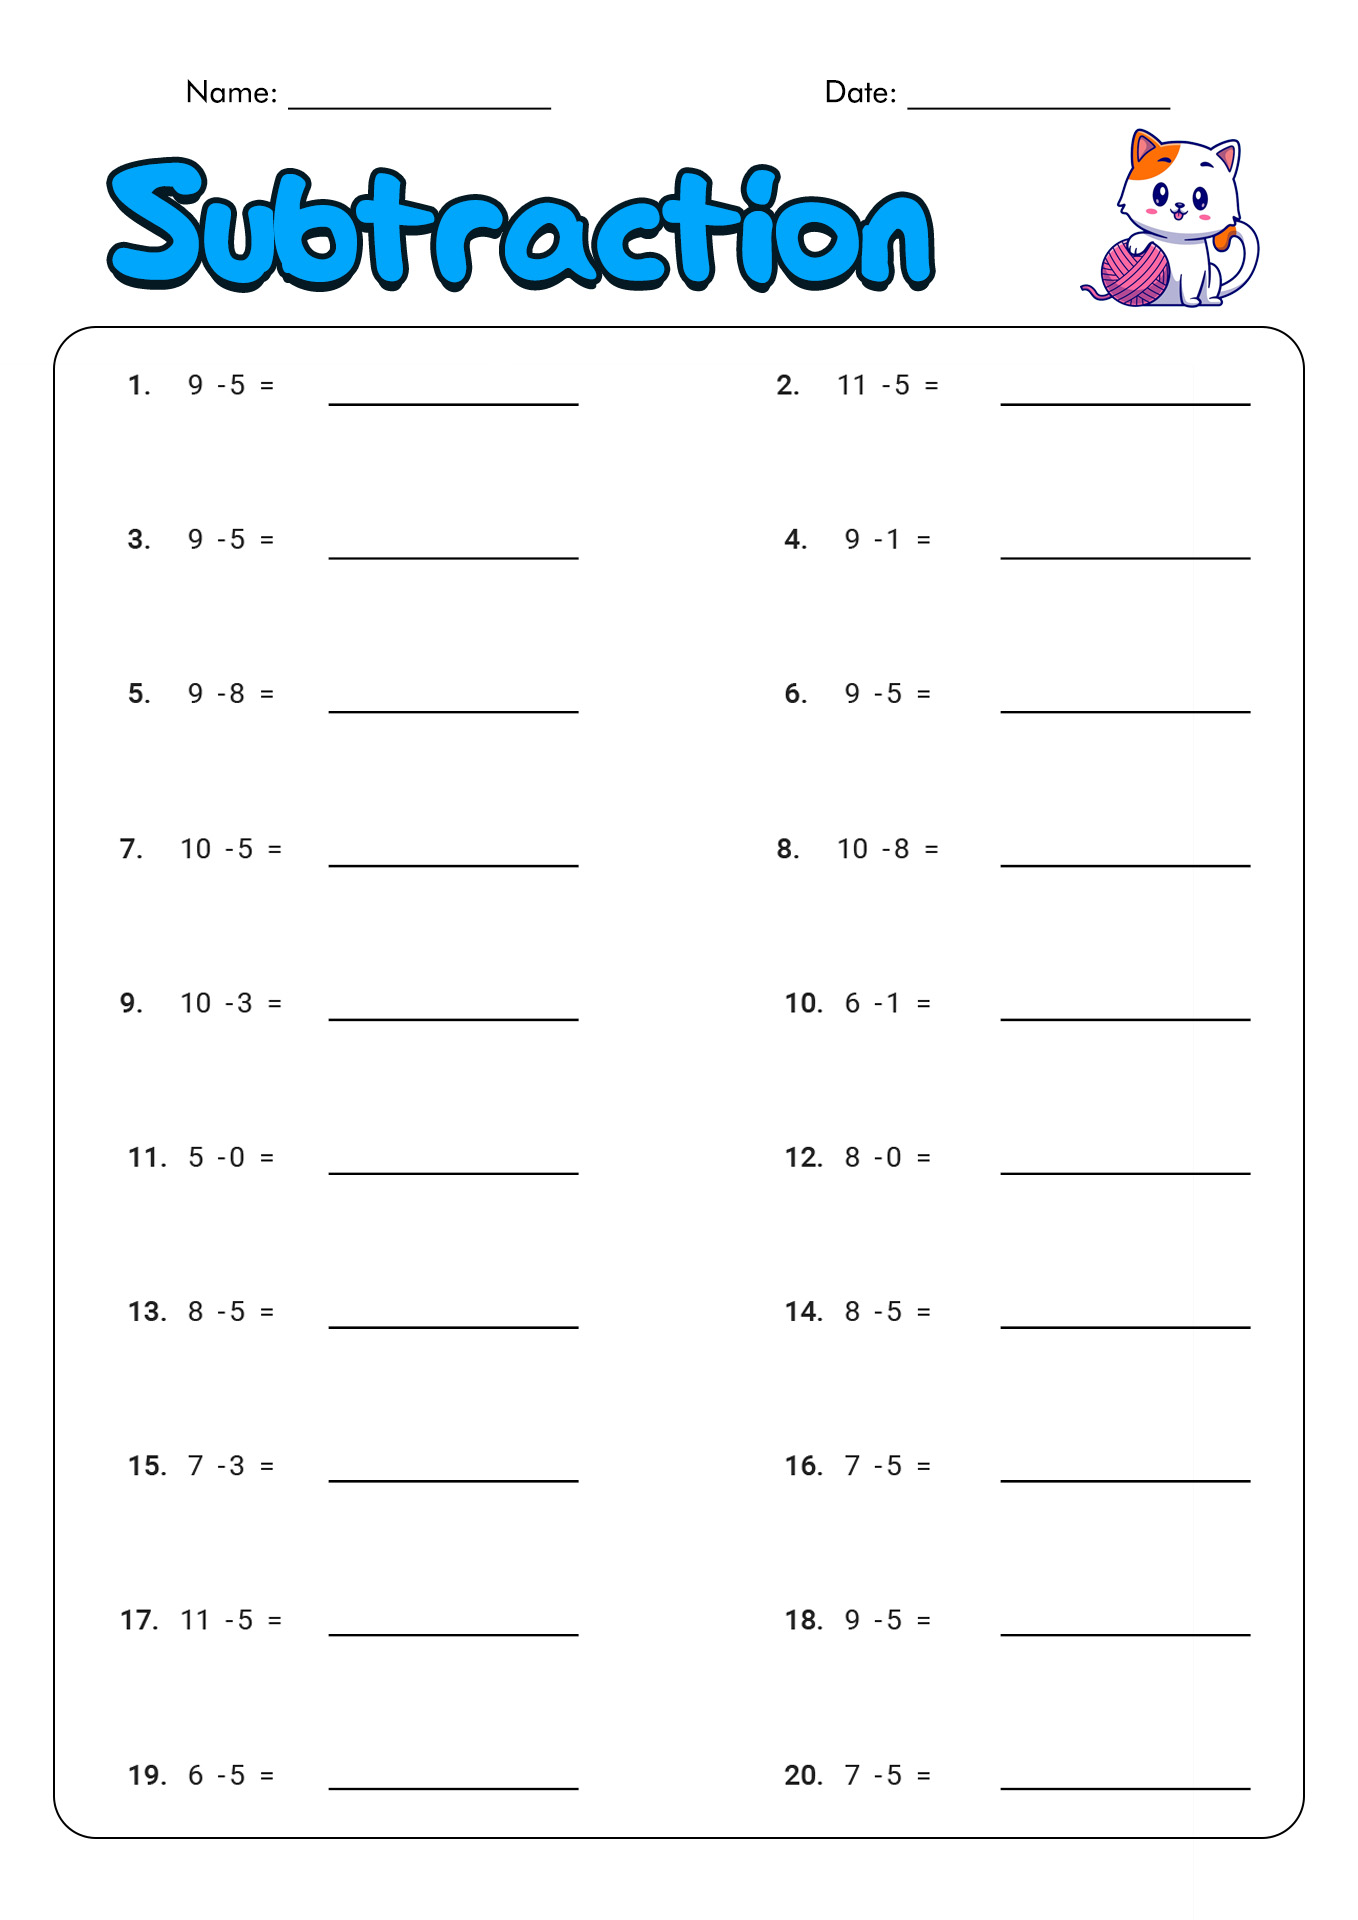 Subtraction Worksheets Grade 2 Image